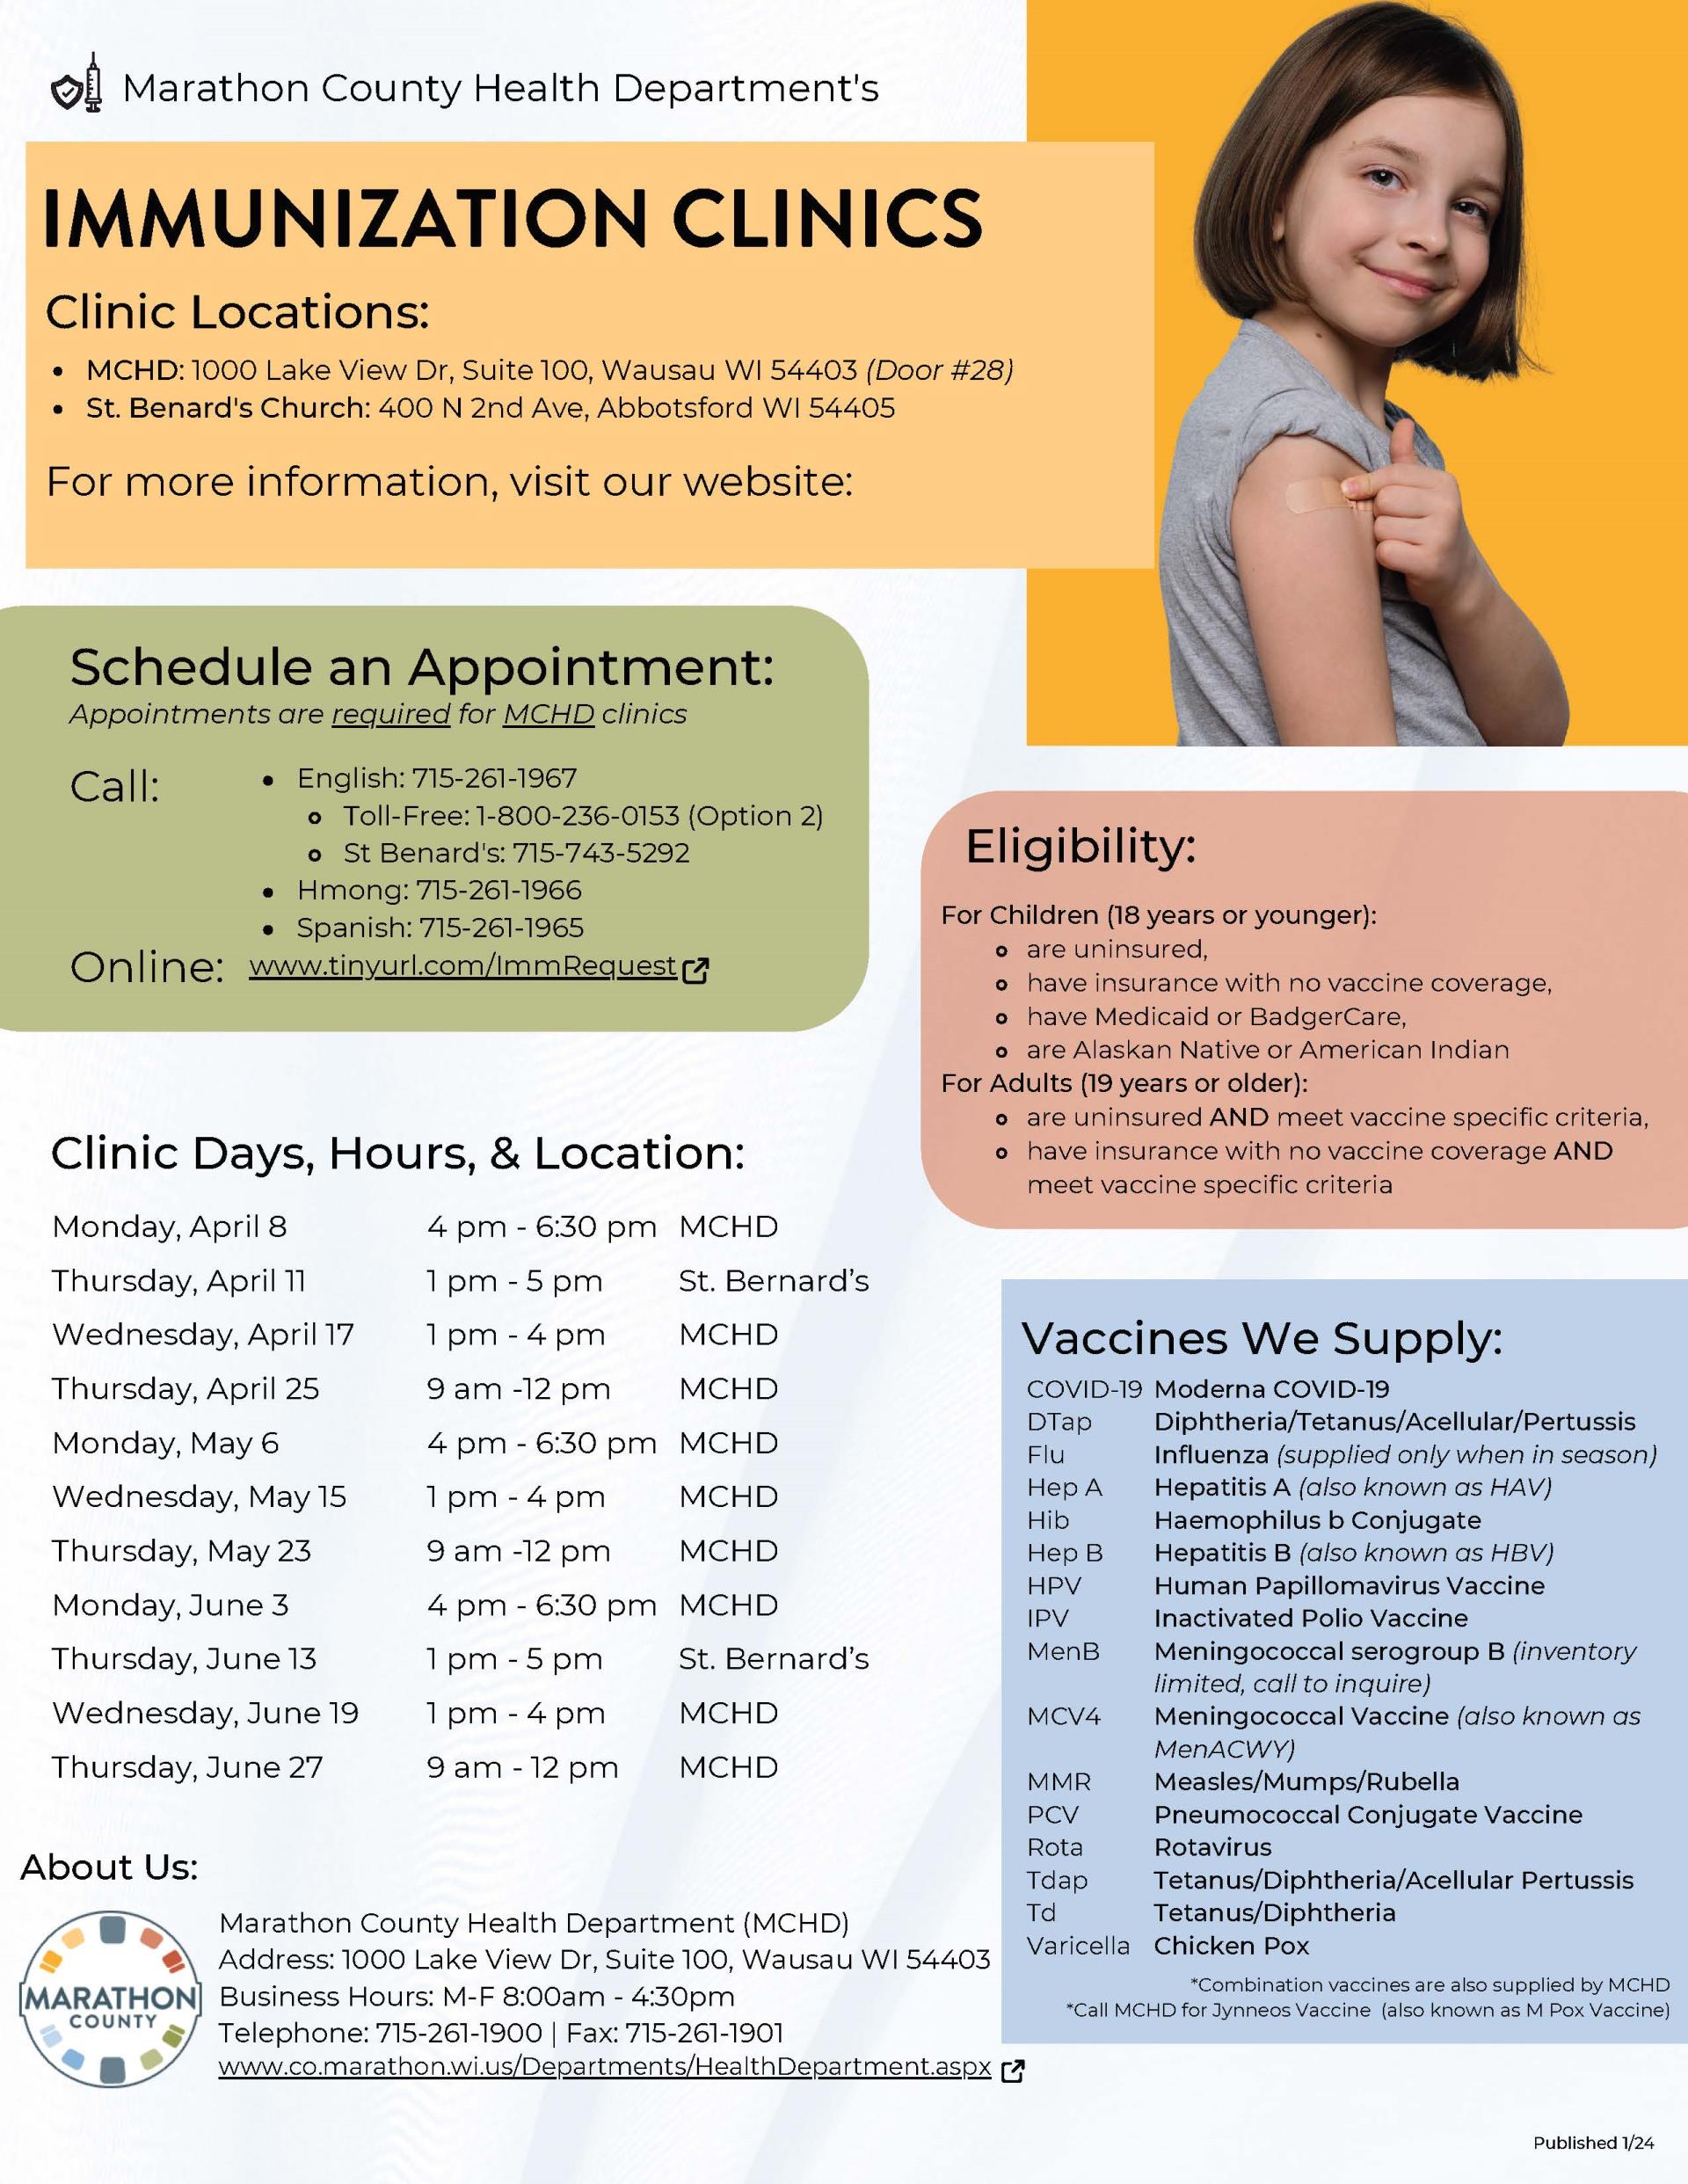 Immunization schedule - click links below to read.